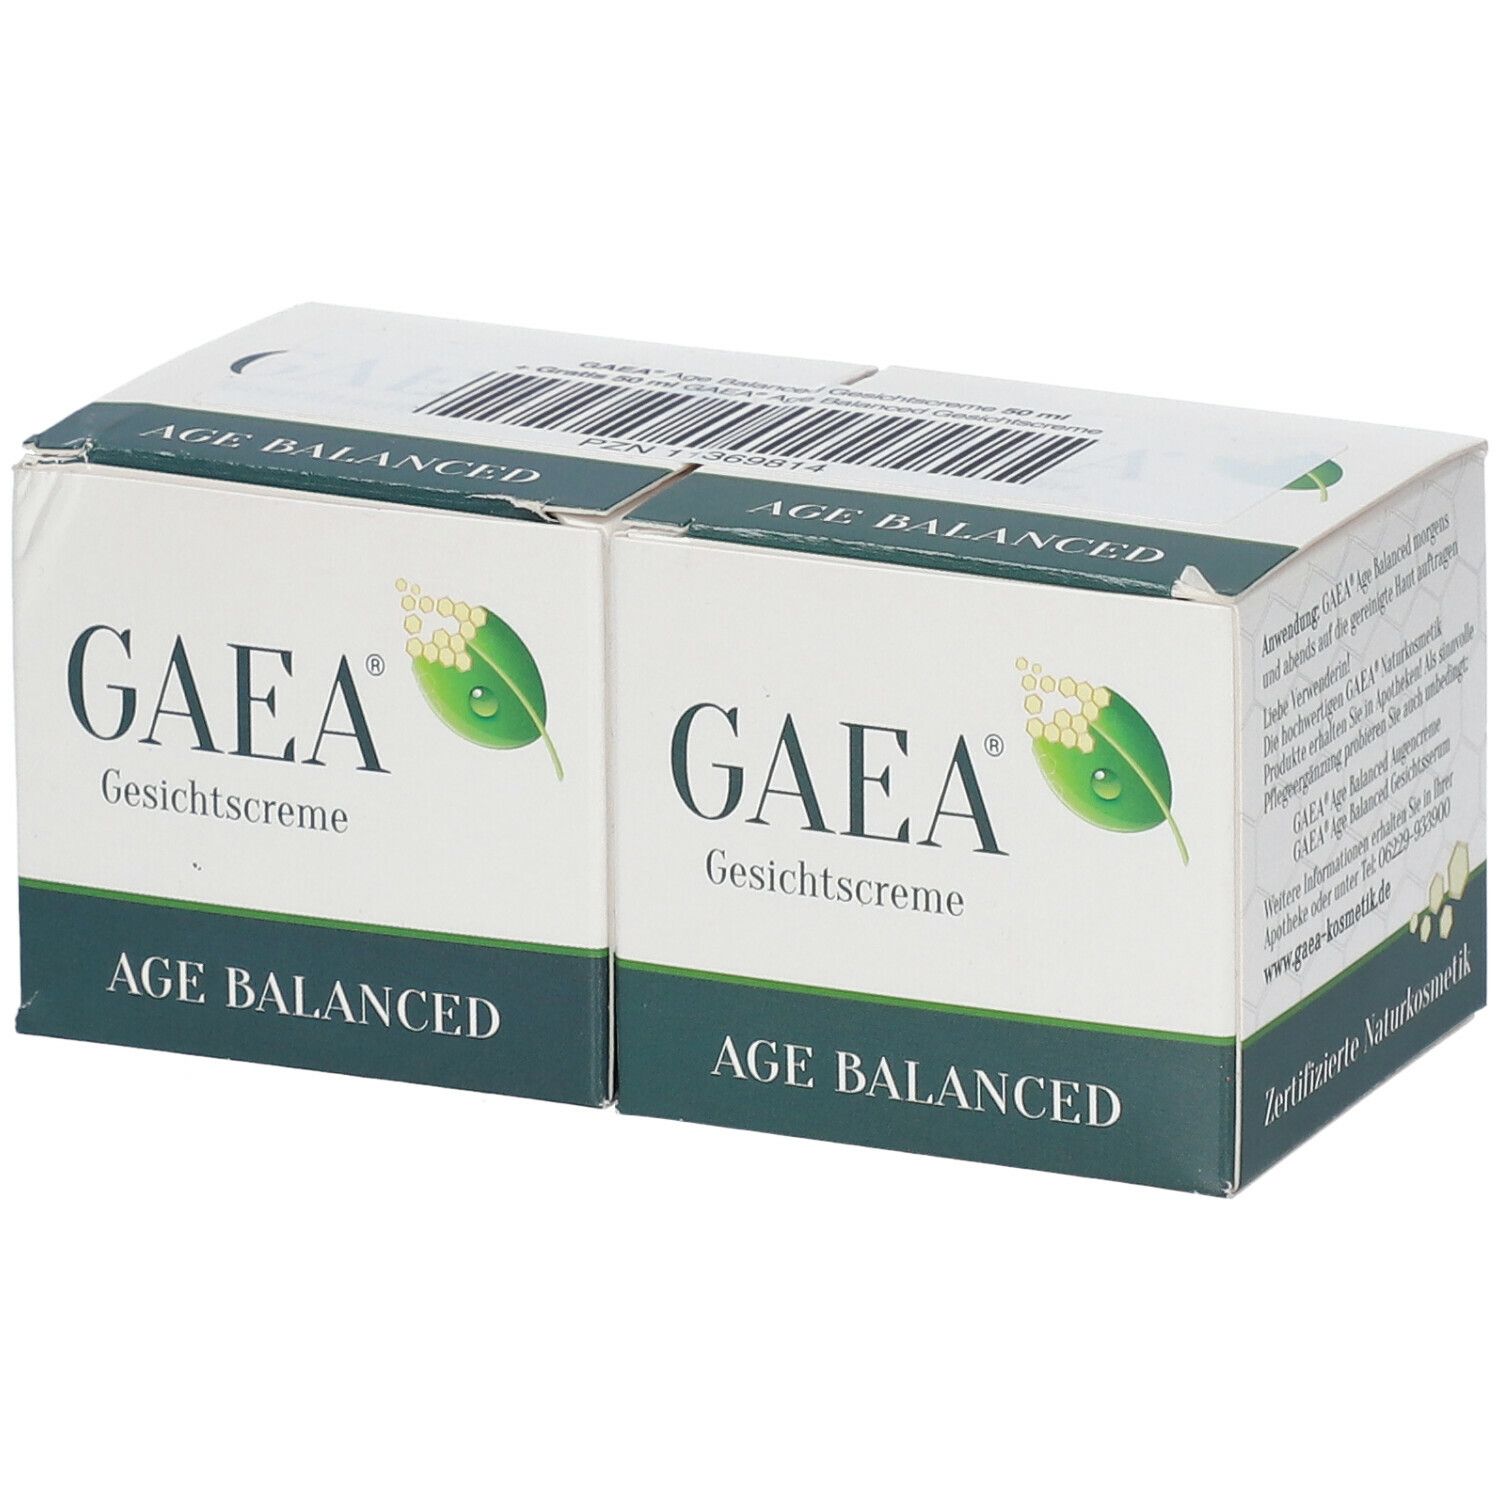 GAEA® Age Balanced Gesichtscreme +GAEA® Age Balanced Gesichtscreme GRATIS